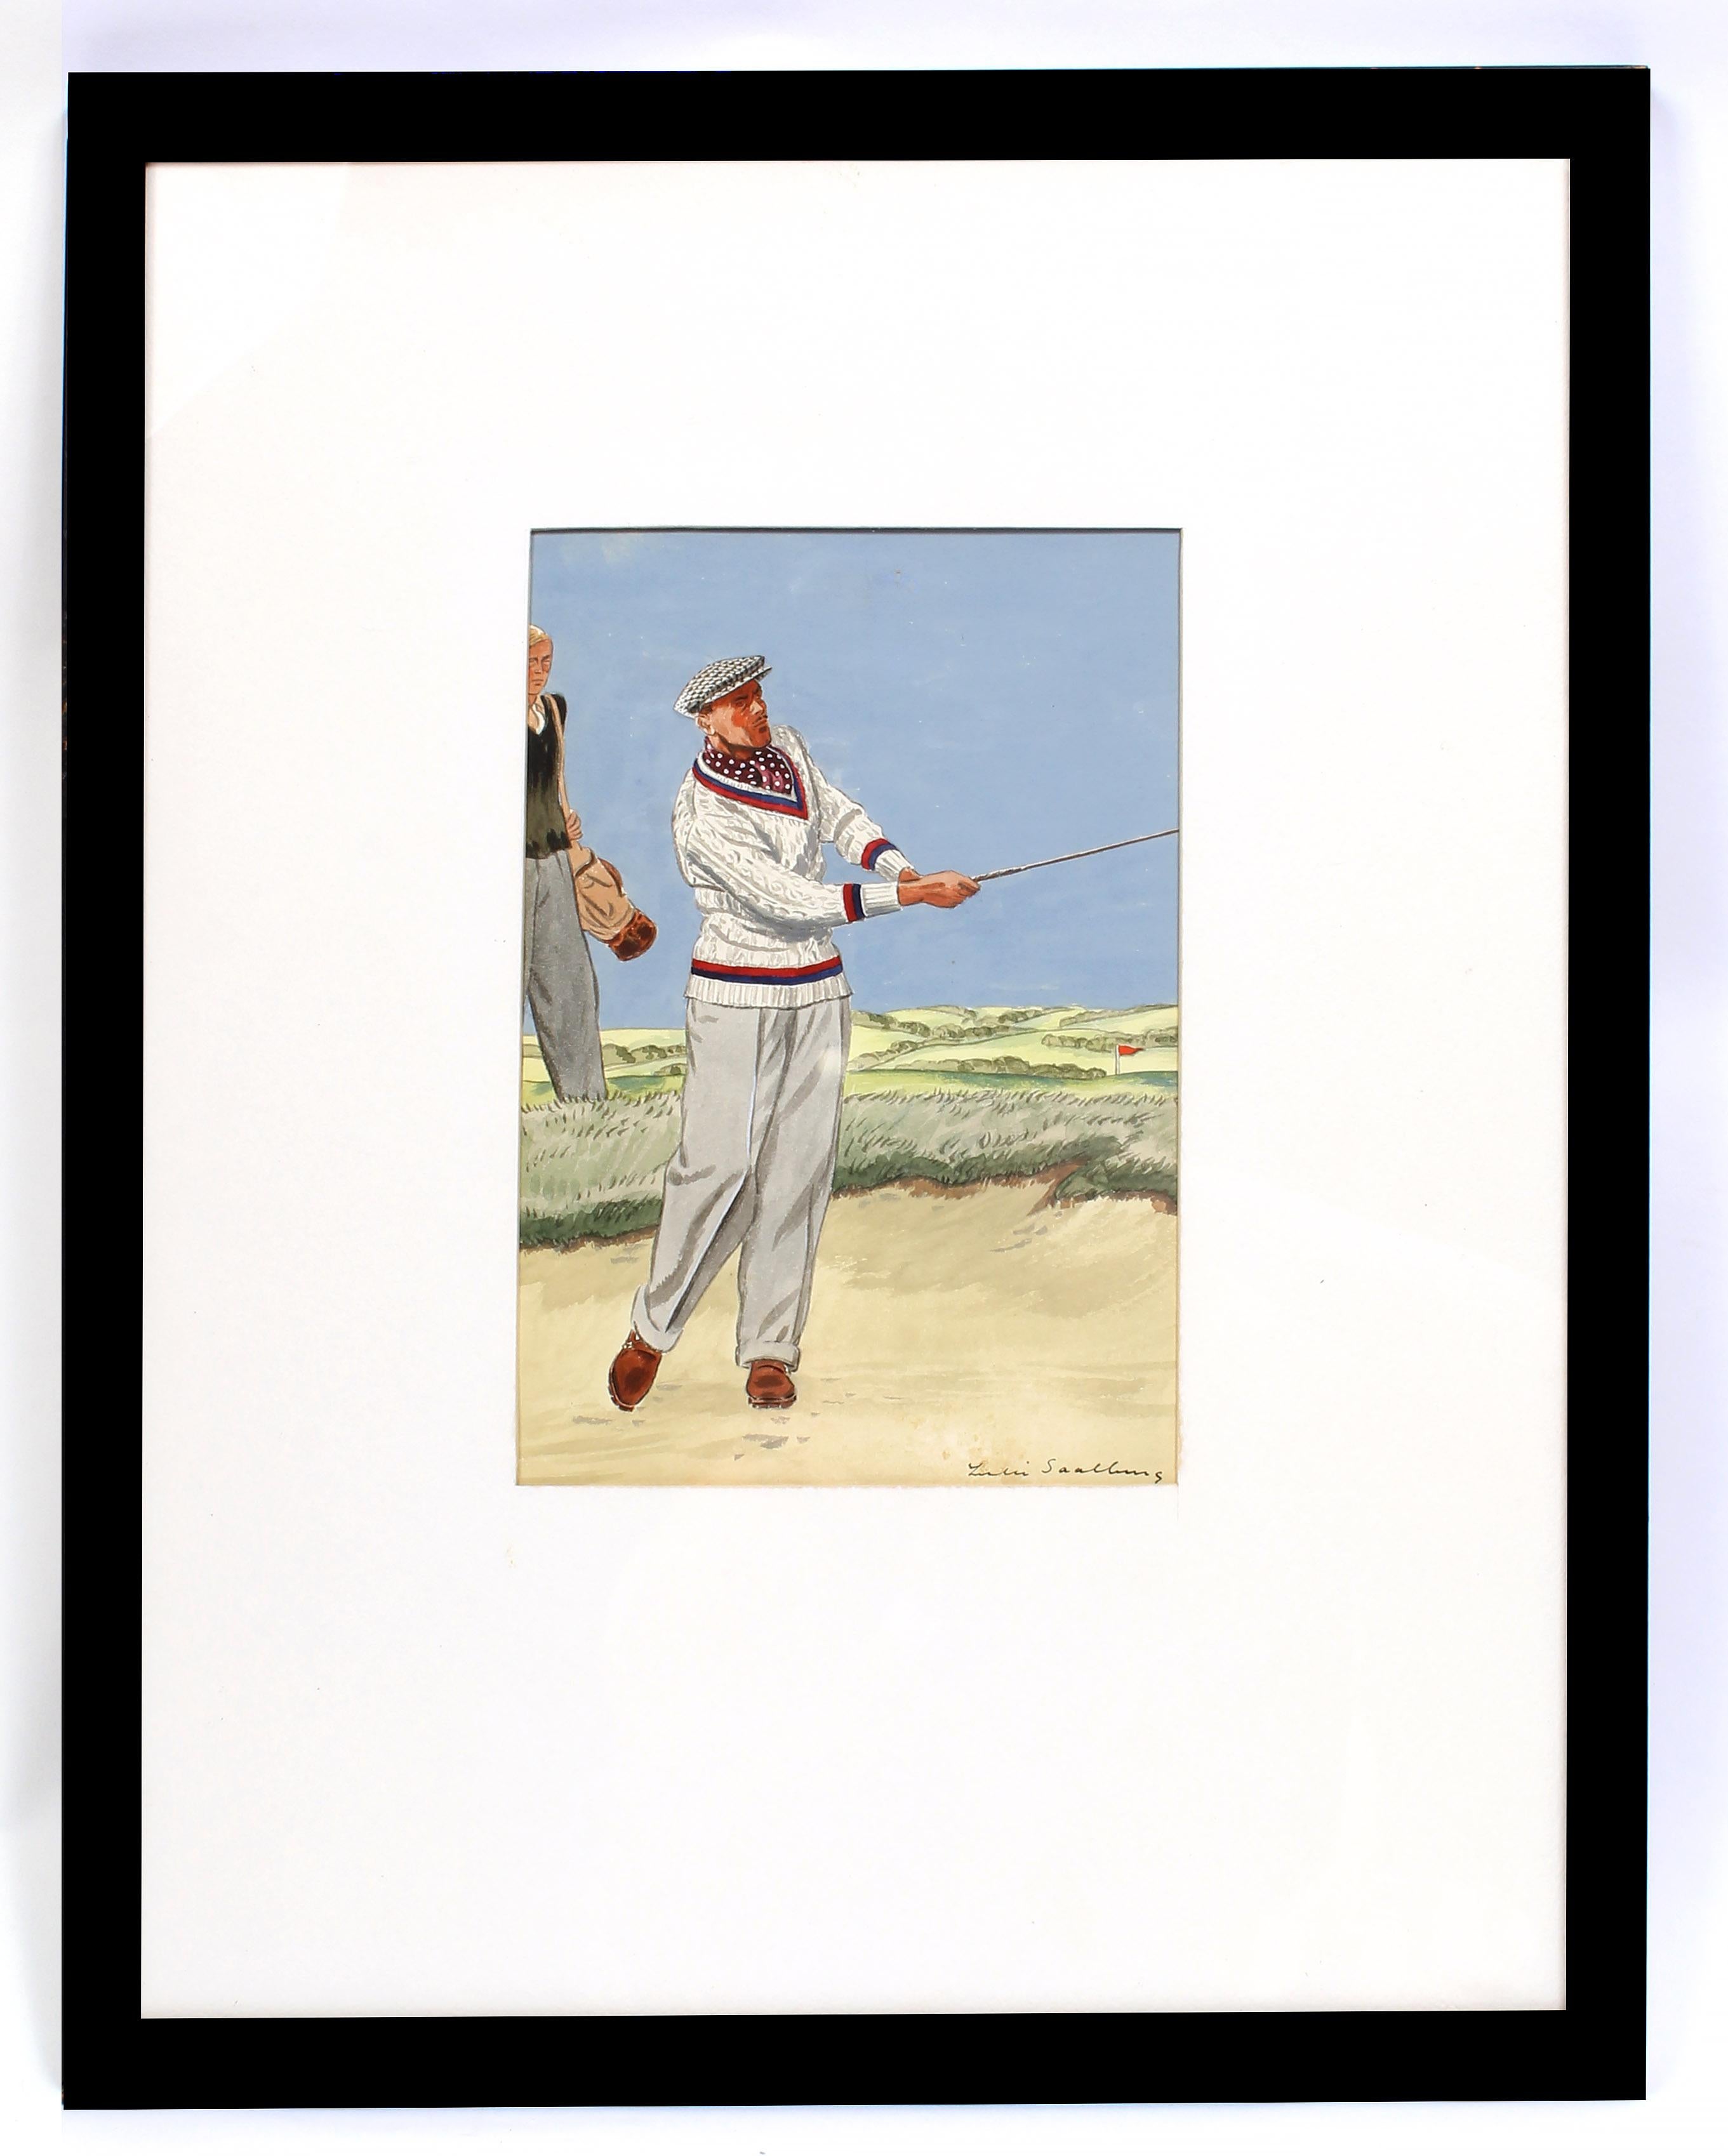 Antique Illustration of a Golfer by Listed Illustrator for Vanity Fair